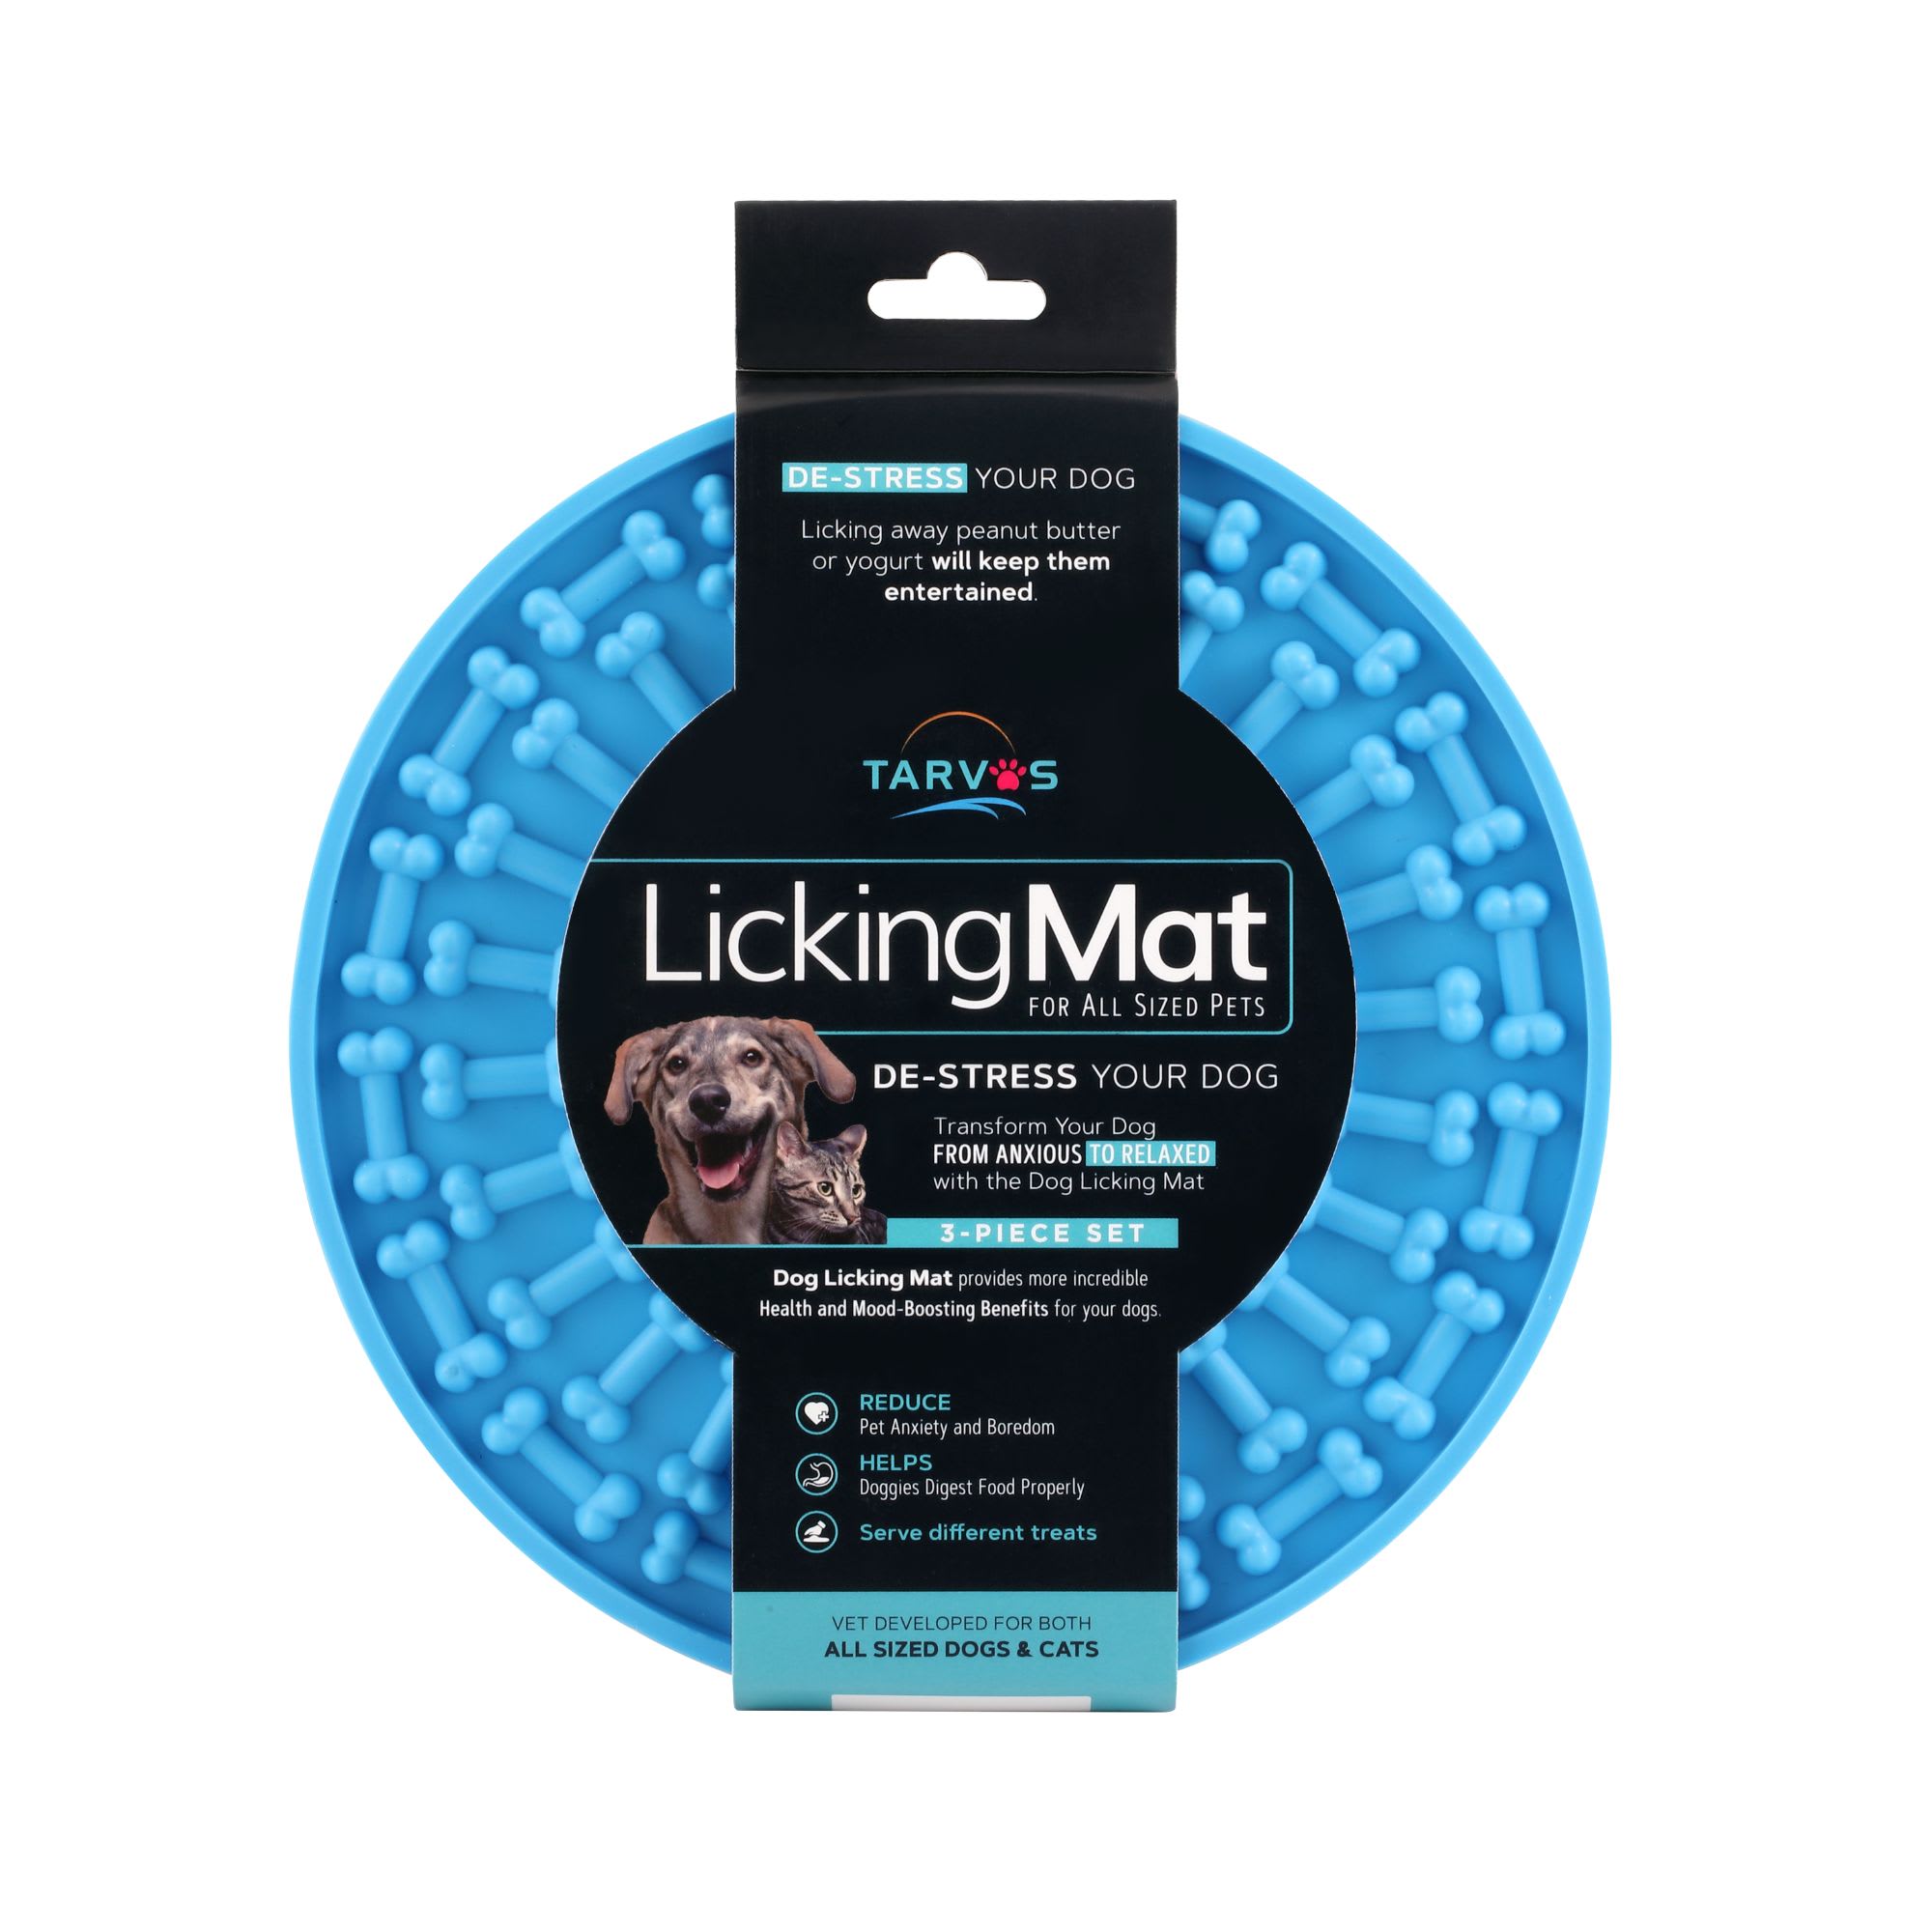 3pcs Dog Lick Mats With Suction , Dog Food Mat Feeding Dog Bowl, Food Grade  Silicone Pet Lick Mat